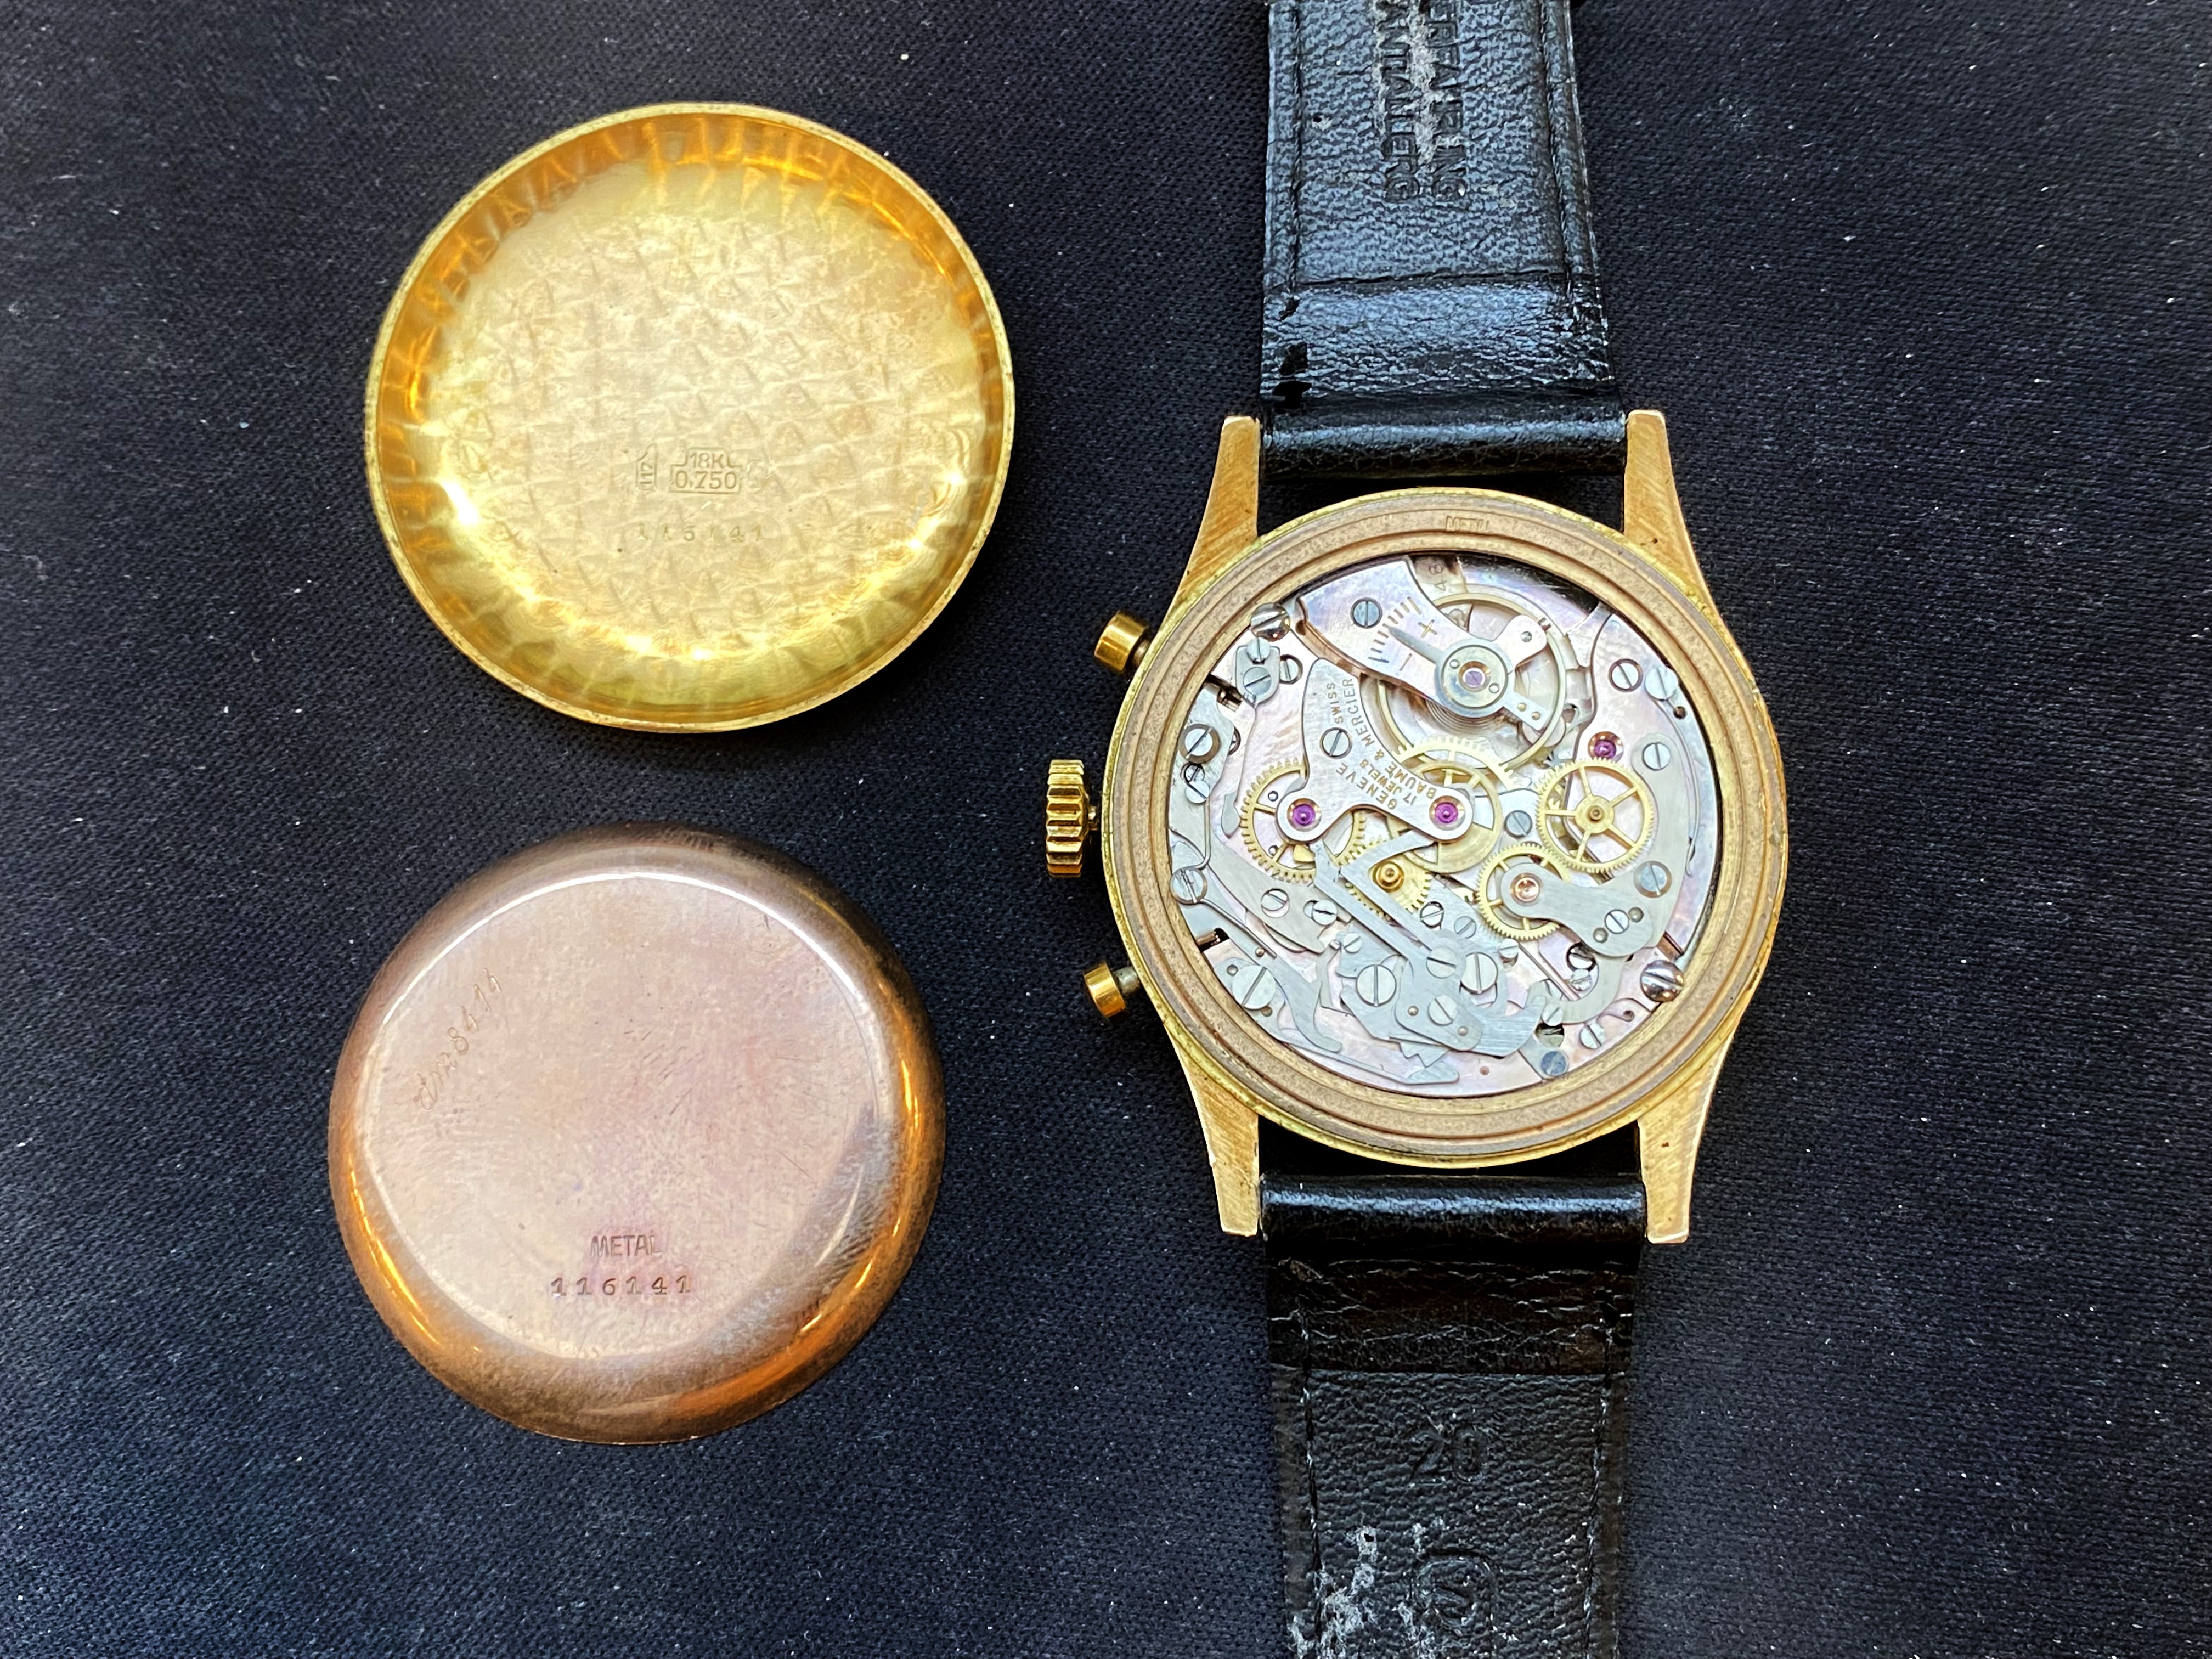 No Reserve - Baume & Mercier chronograph 18K. 3940 - Men's watch - approx. 1940. - Image 6 of 6